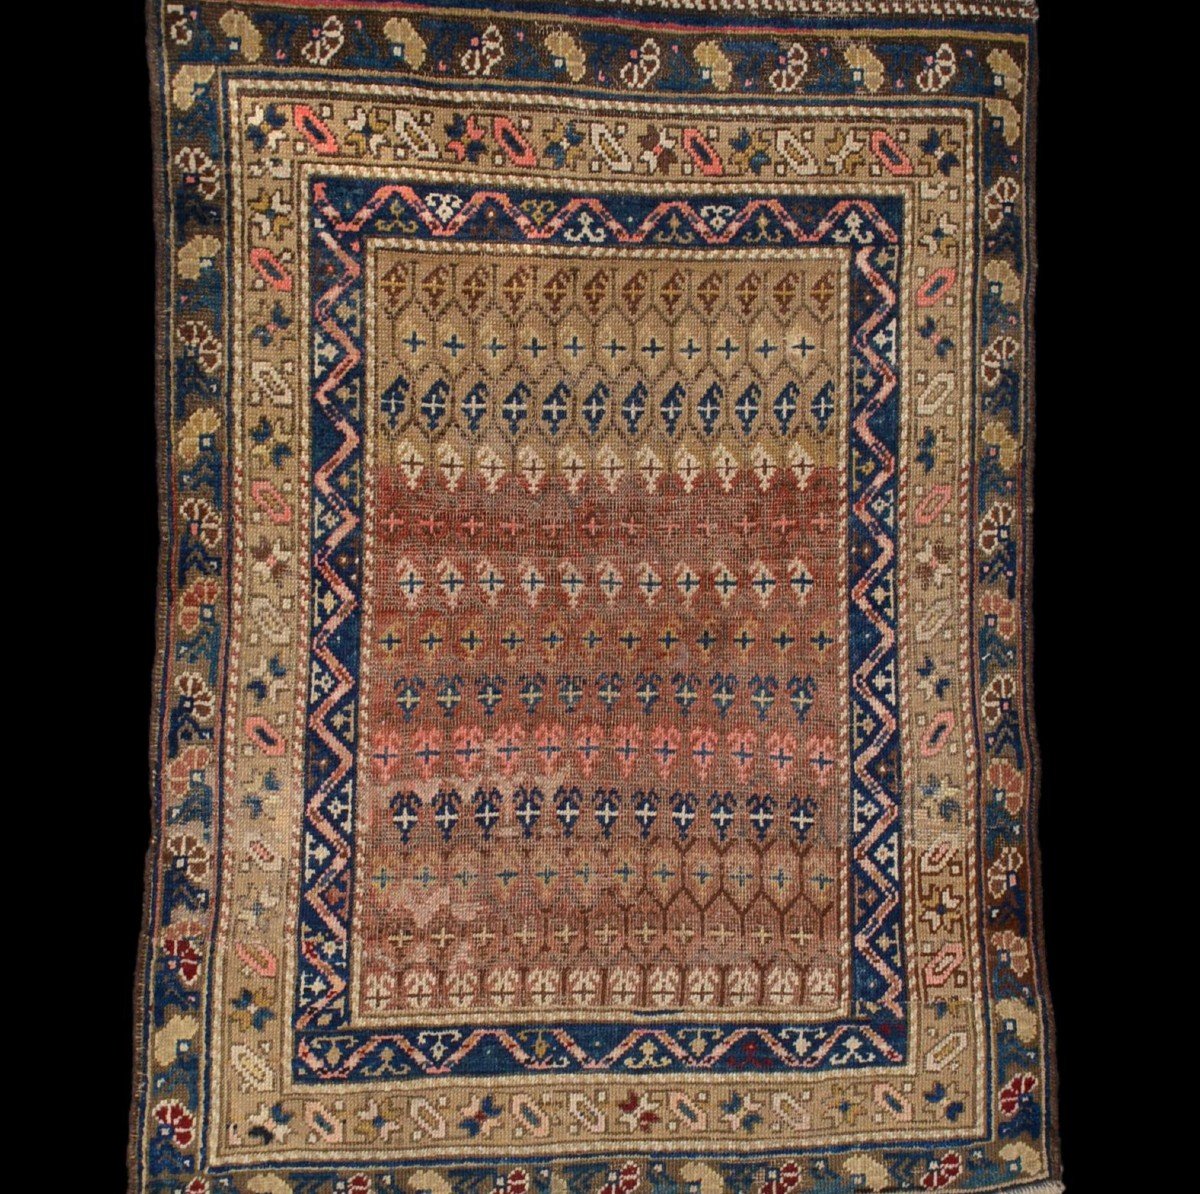 Afshar Rug, Boteh Decor, 105 Cm X 147 Cm, Hand-knotted Wool, Mid-twentieth Century, Perfect